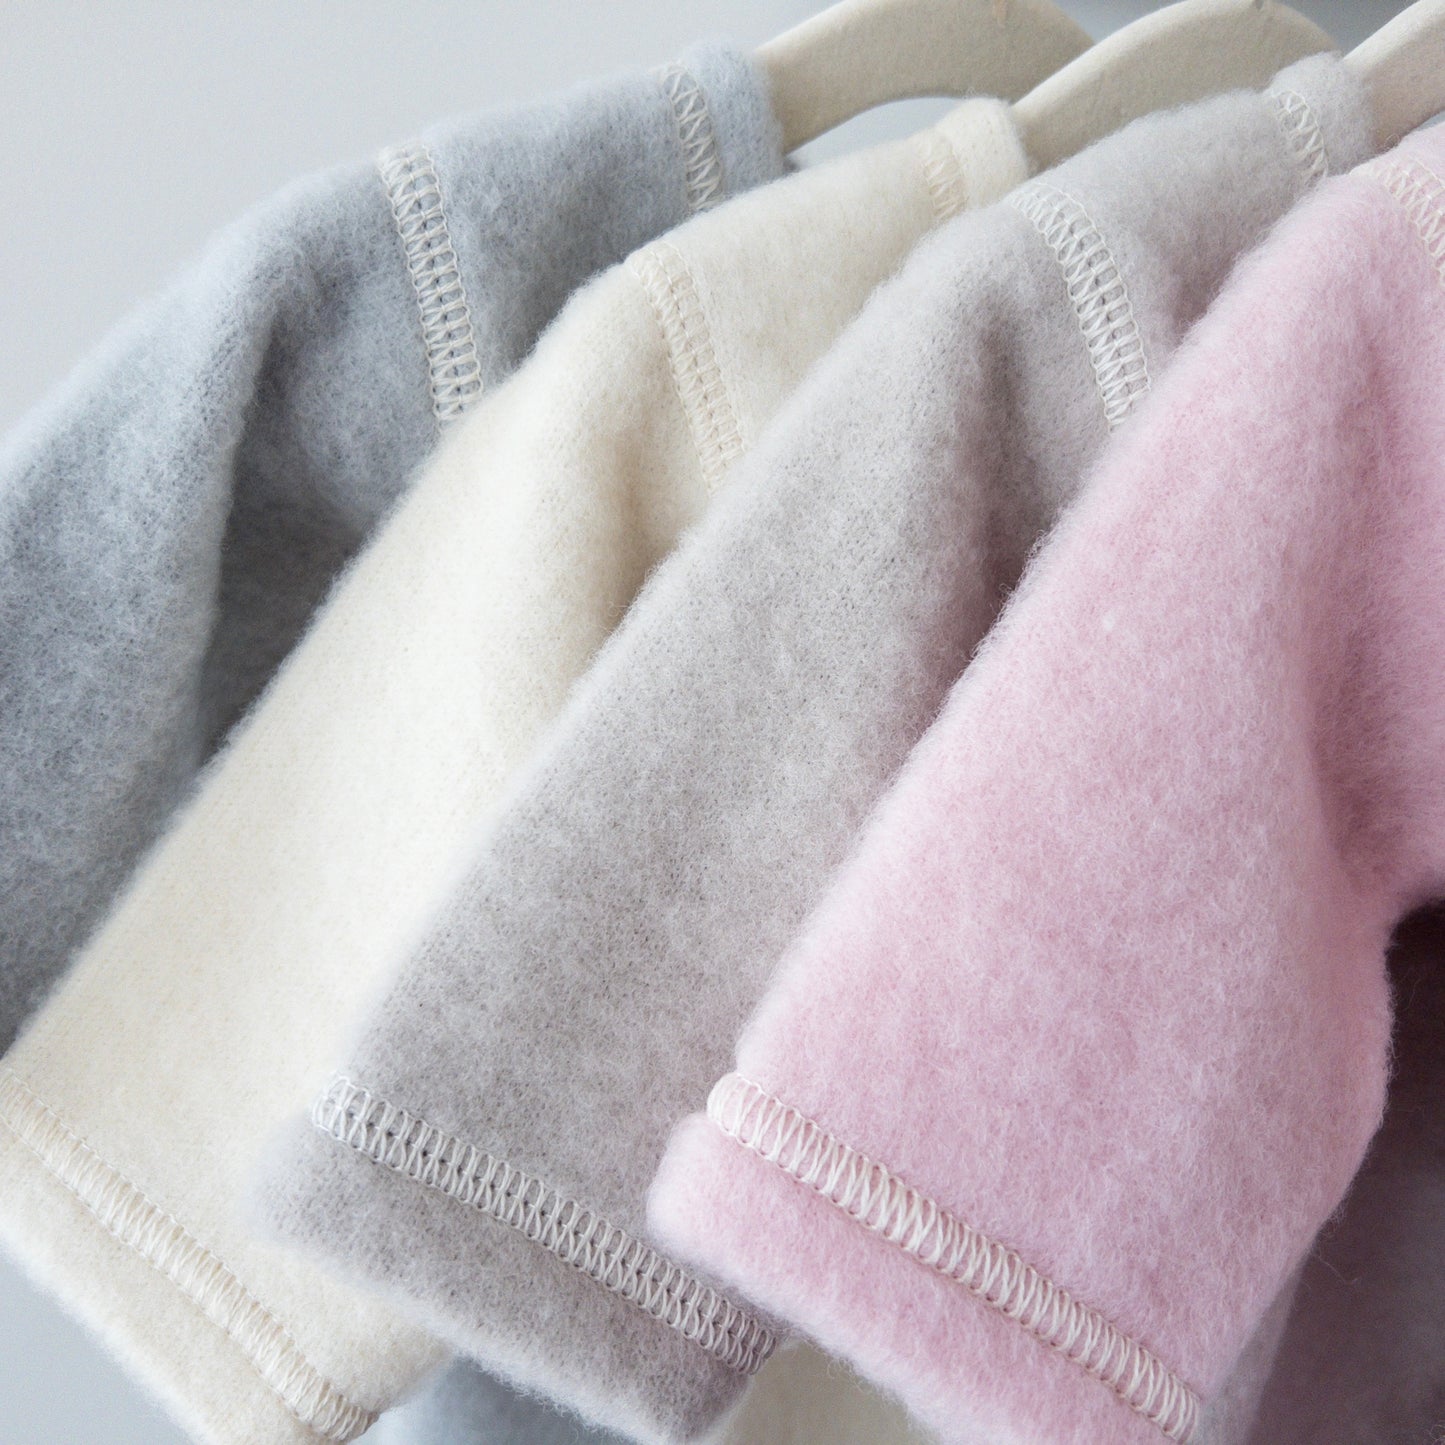 LANACare Baby Sweater in Organic Merino Wool